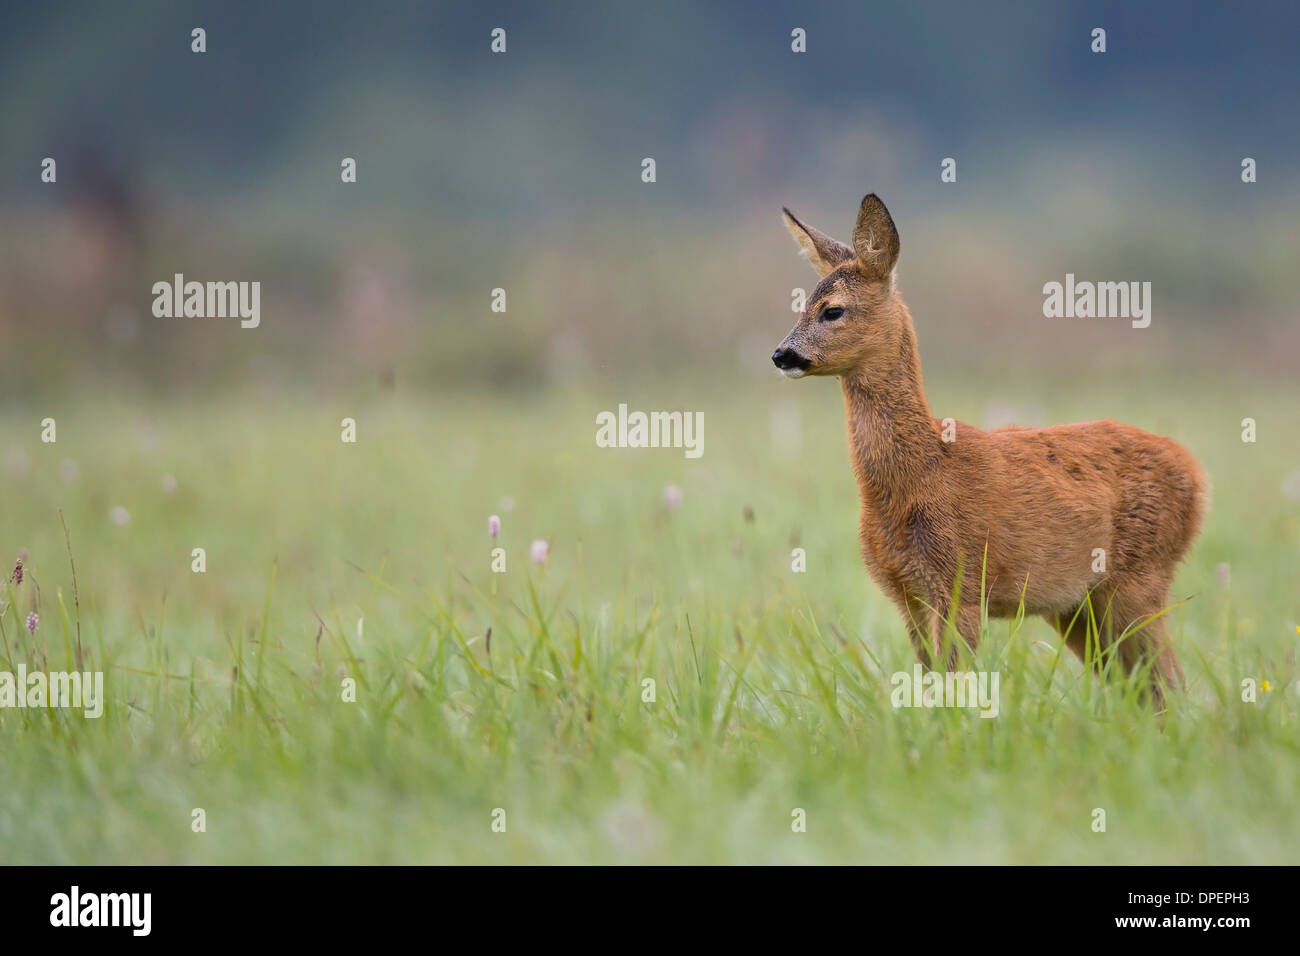 Roe deer in the wild. Stock Photo